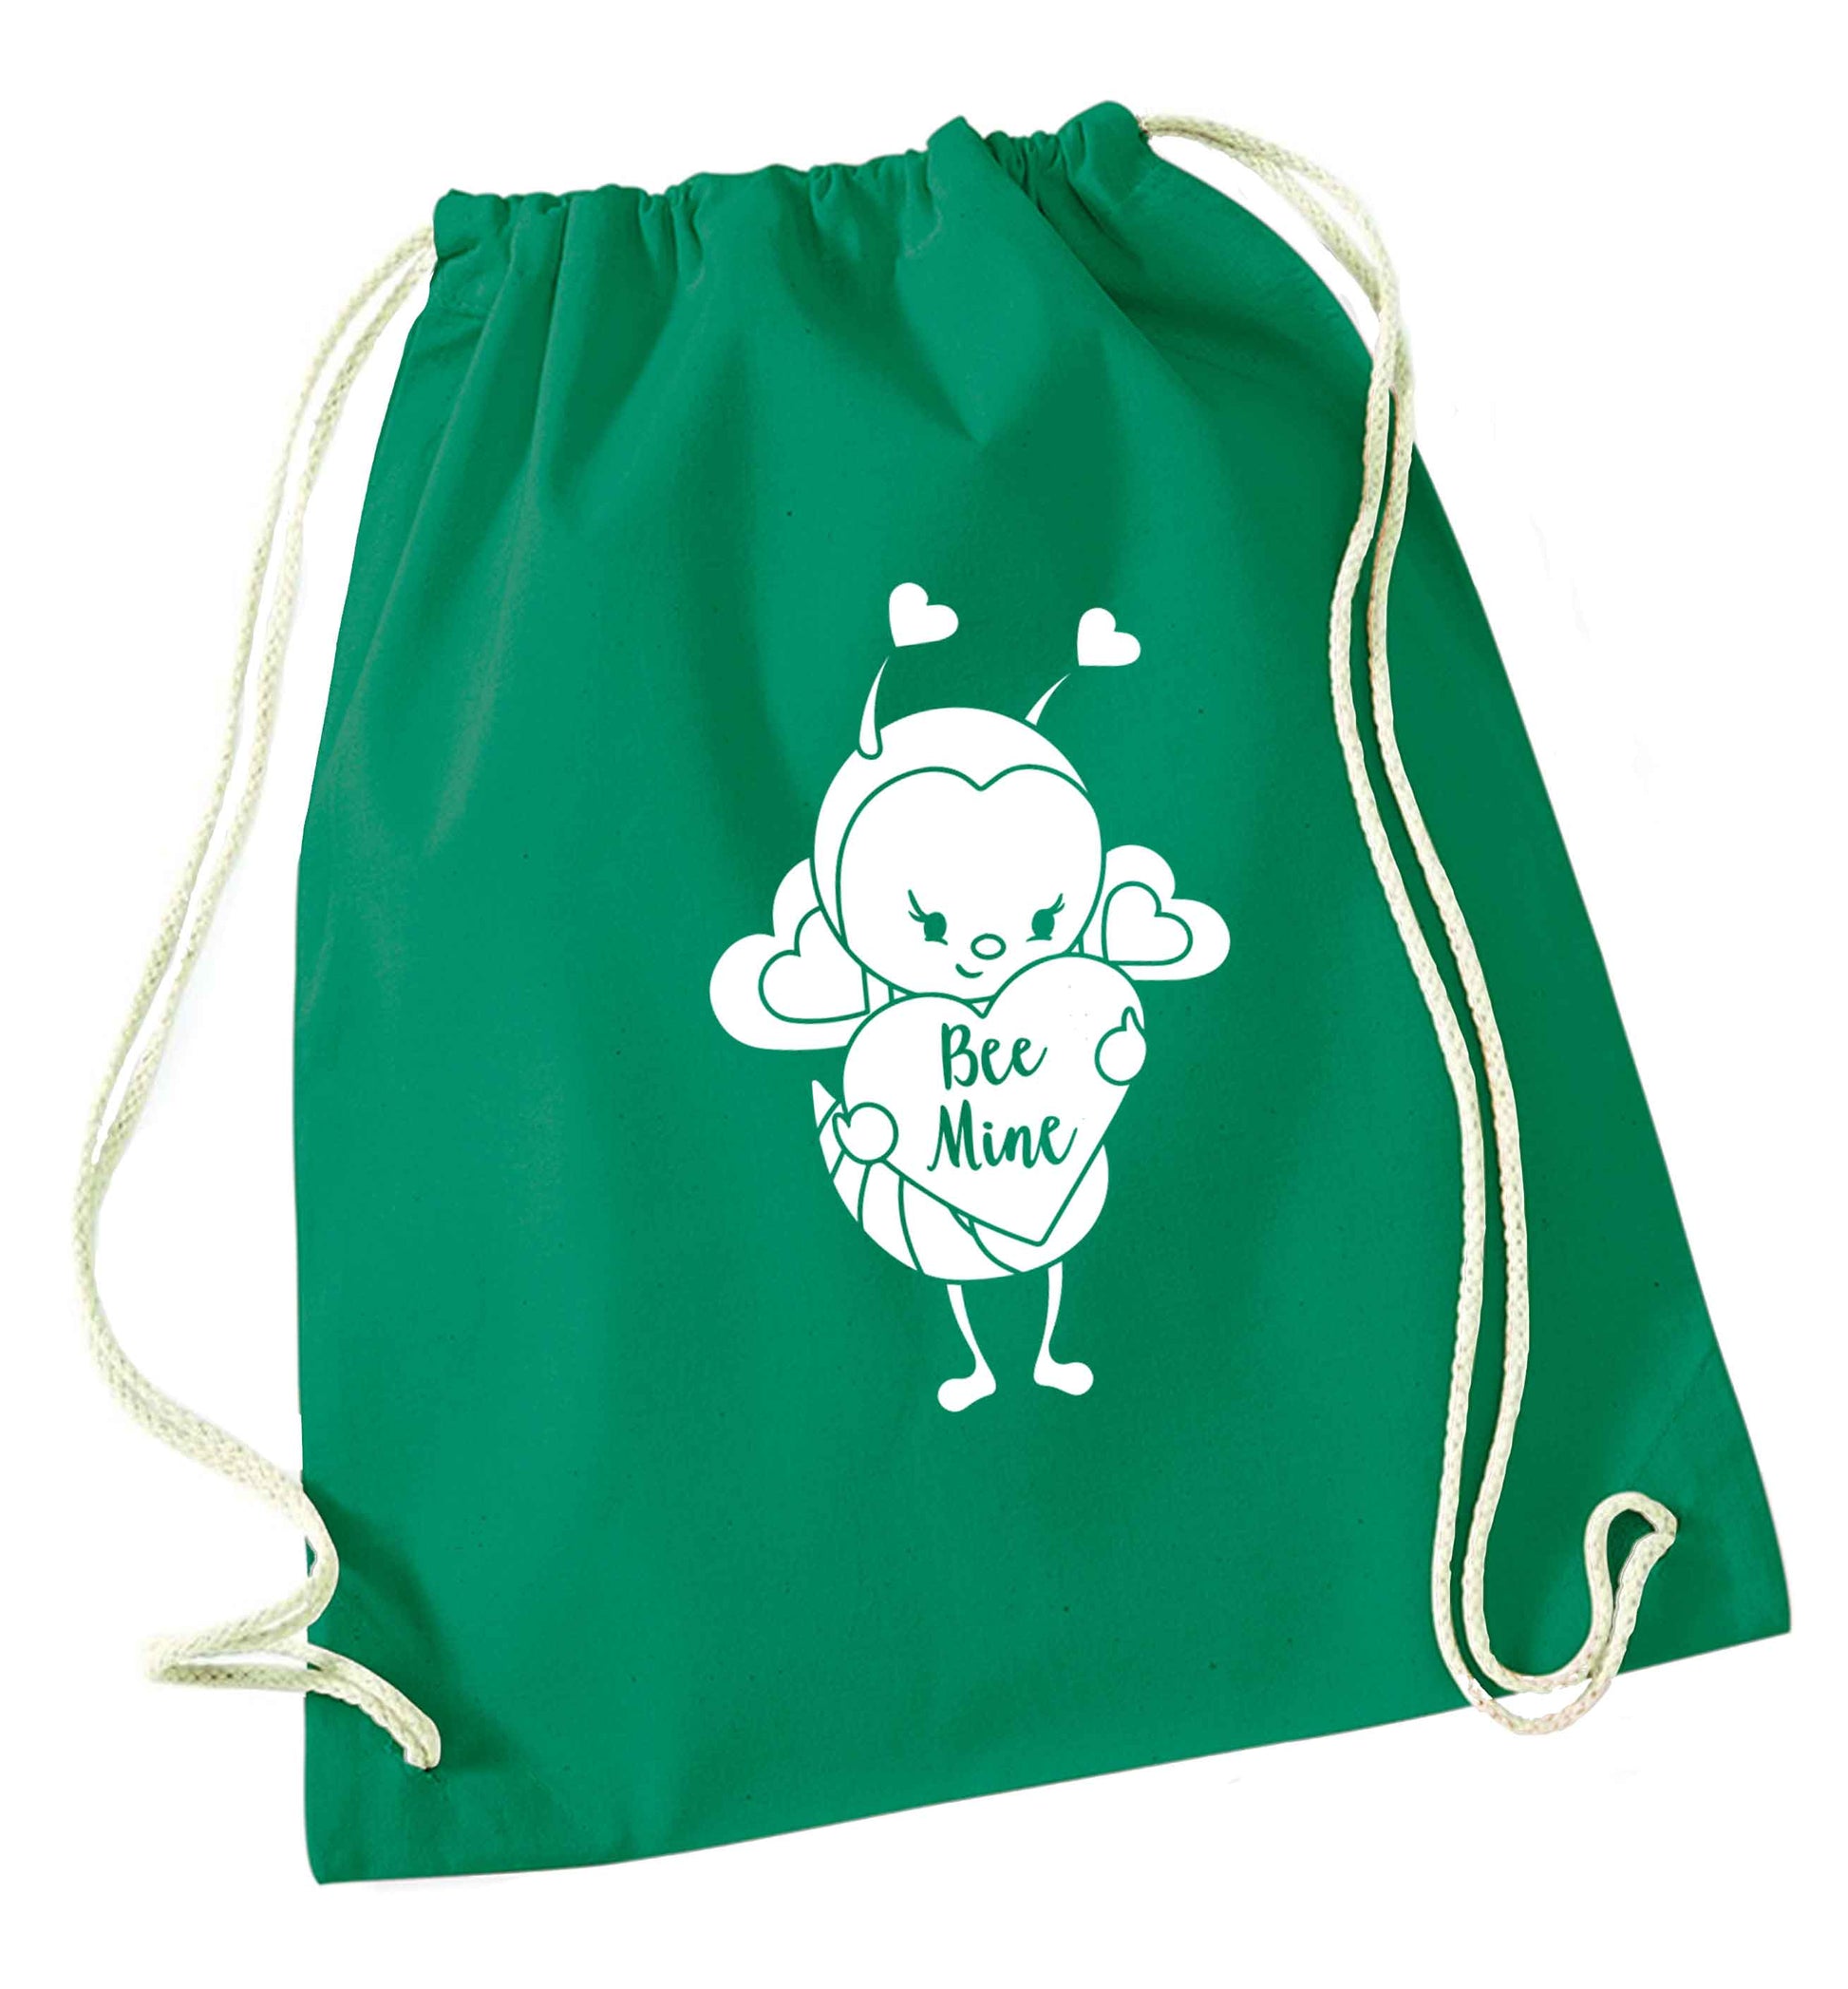 Bee mine green drawstring bag